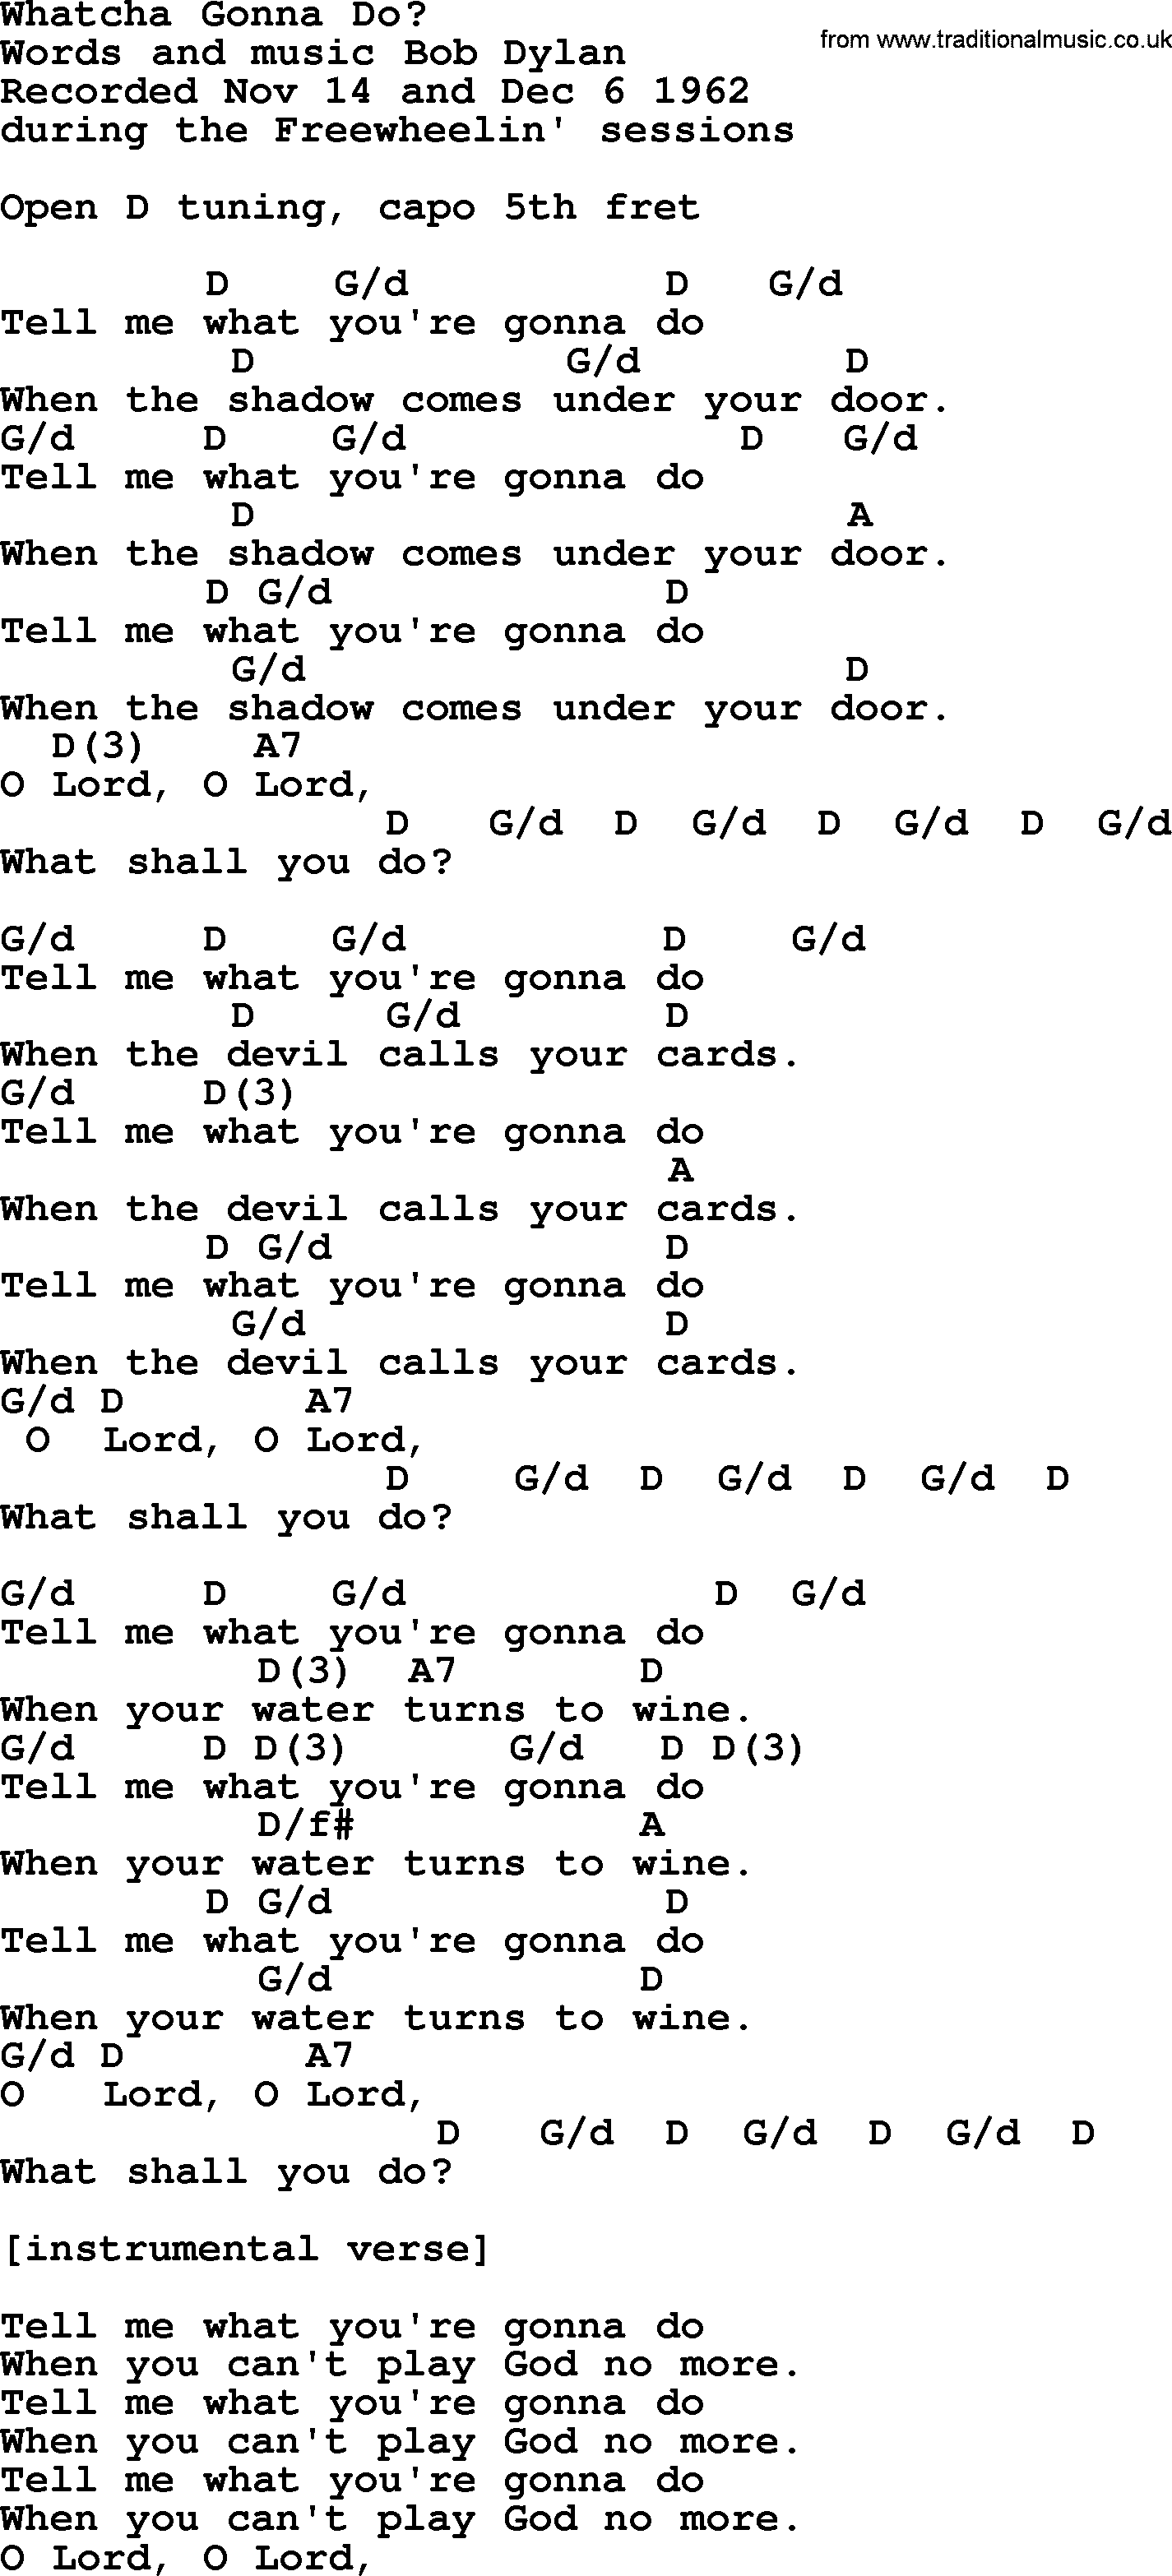 Bob Dylan song, lyrics with chords - Whatcha Gonna Do